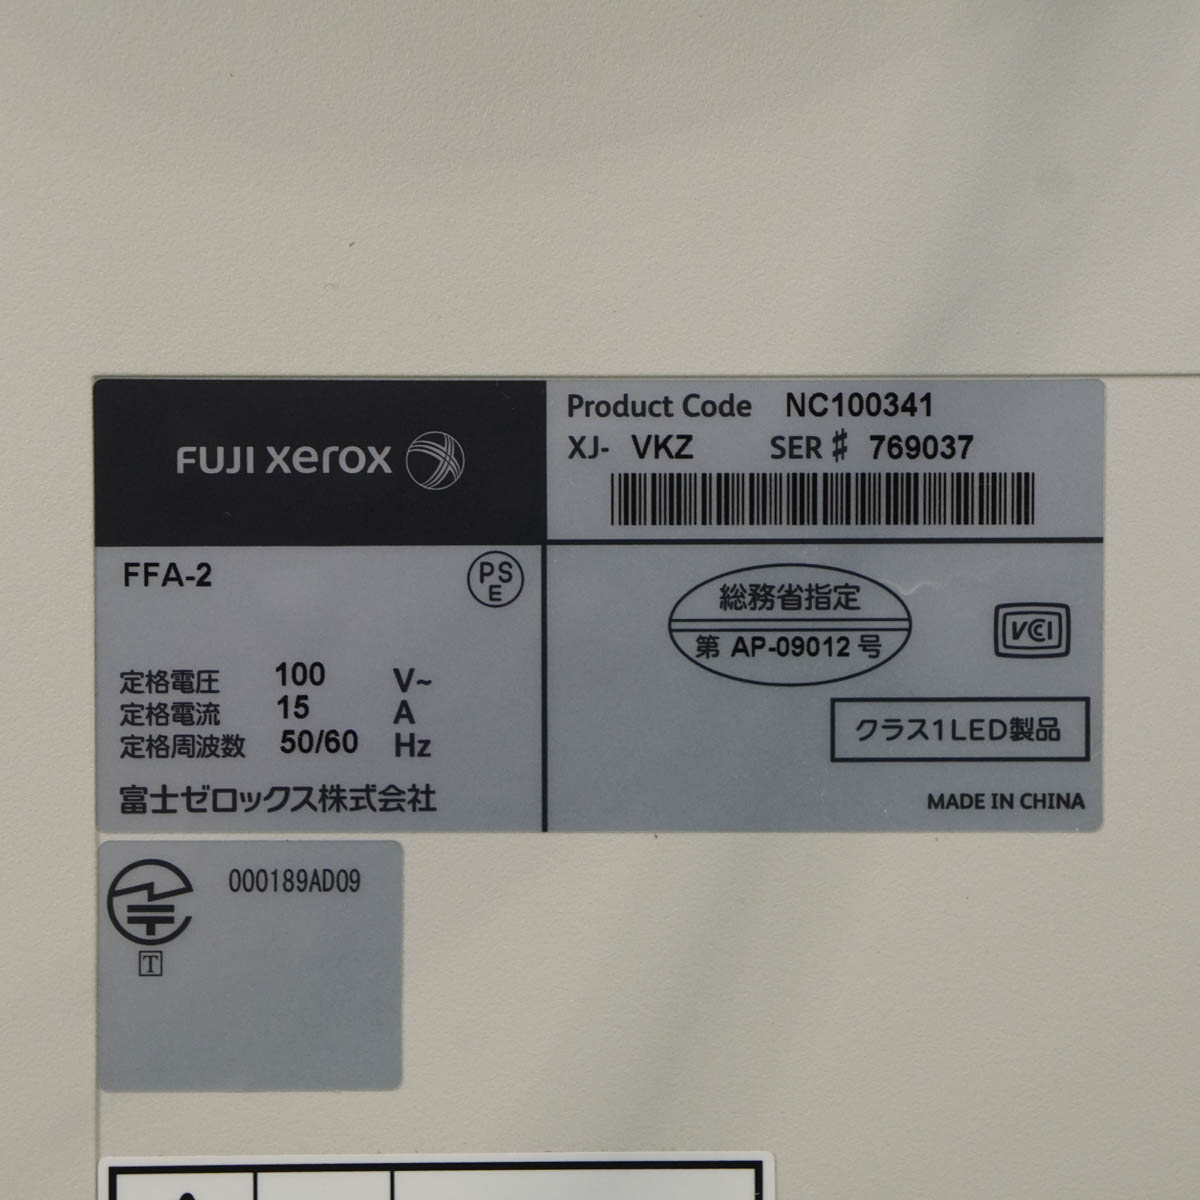 JB]USED 現状販売 印刷63788枚 FUJI XEROX DocuCentre-IV C2270 カラー複合機 [02828-0028]  その他 中古販売分析機器計測器総合商社ディルウィングス